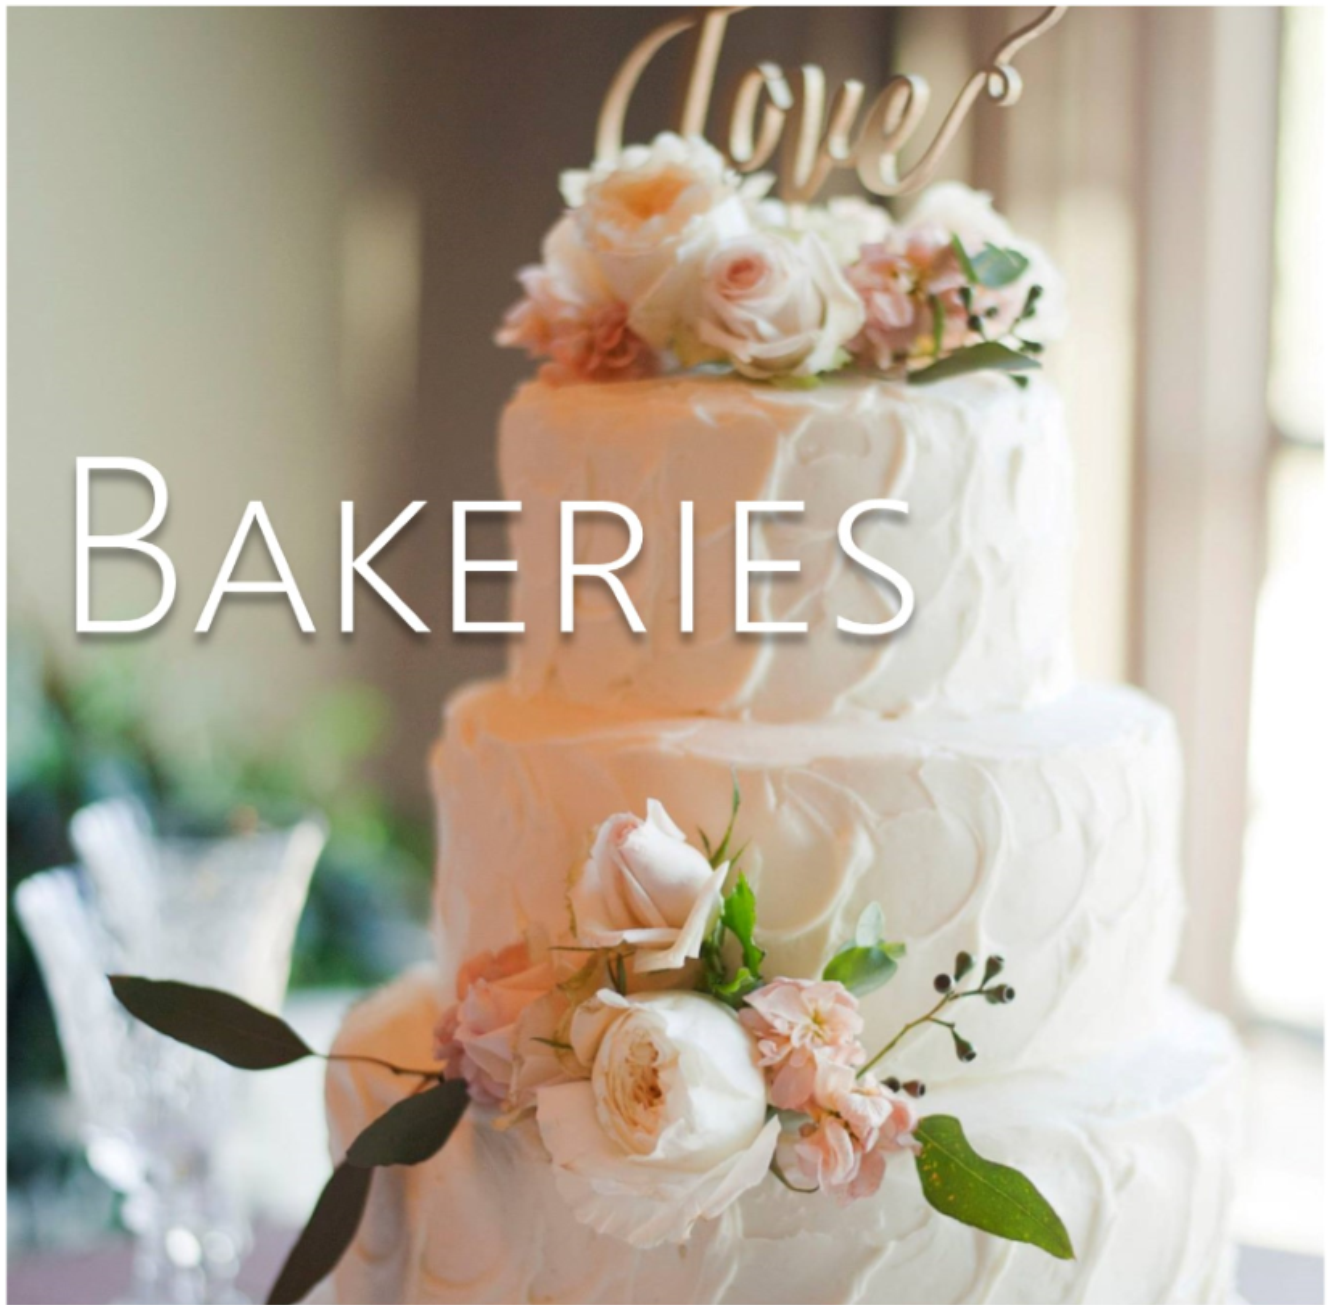 wedding cakes // the overwhelmed bride wedding blog